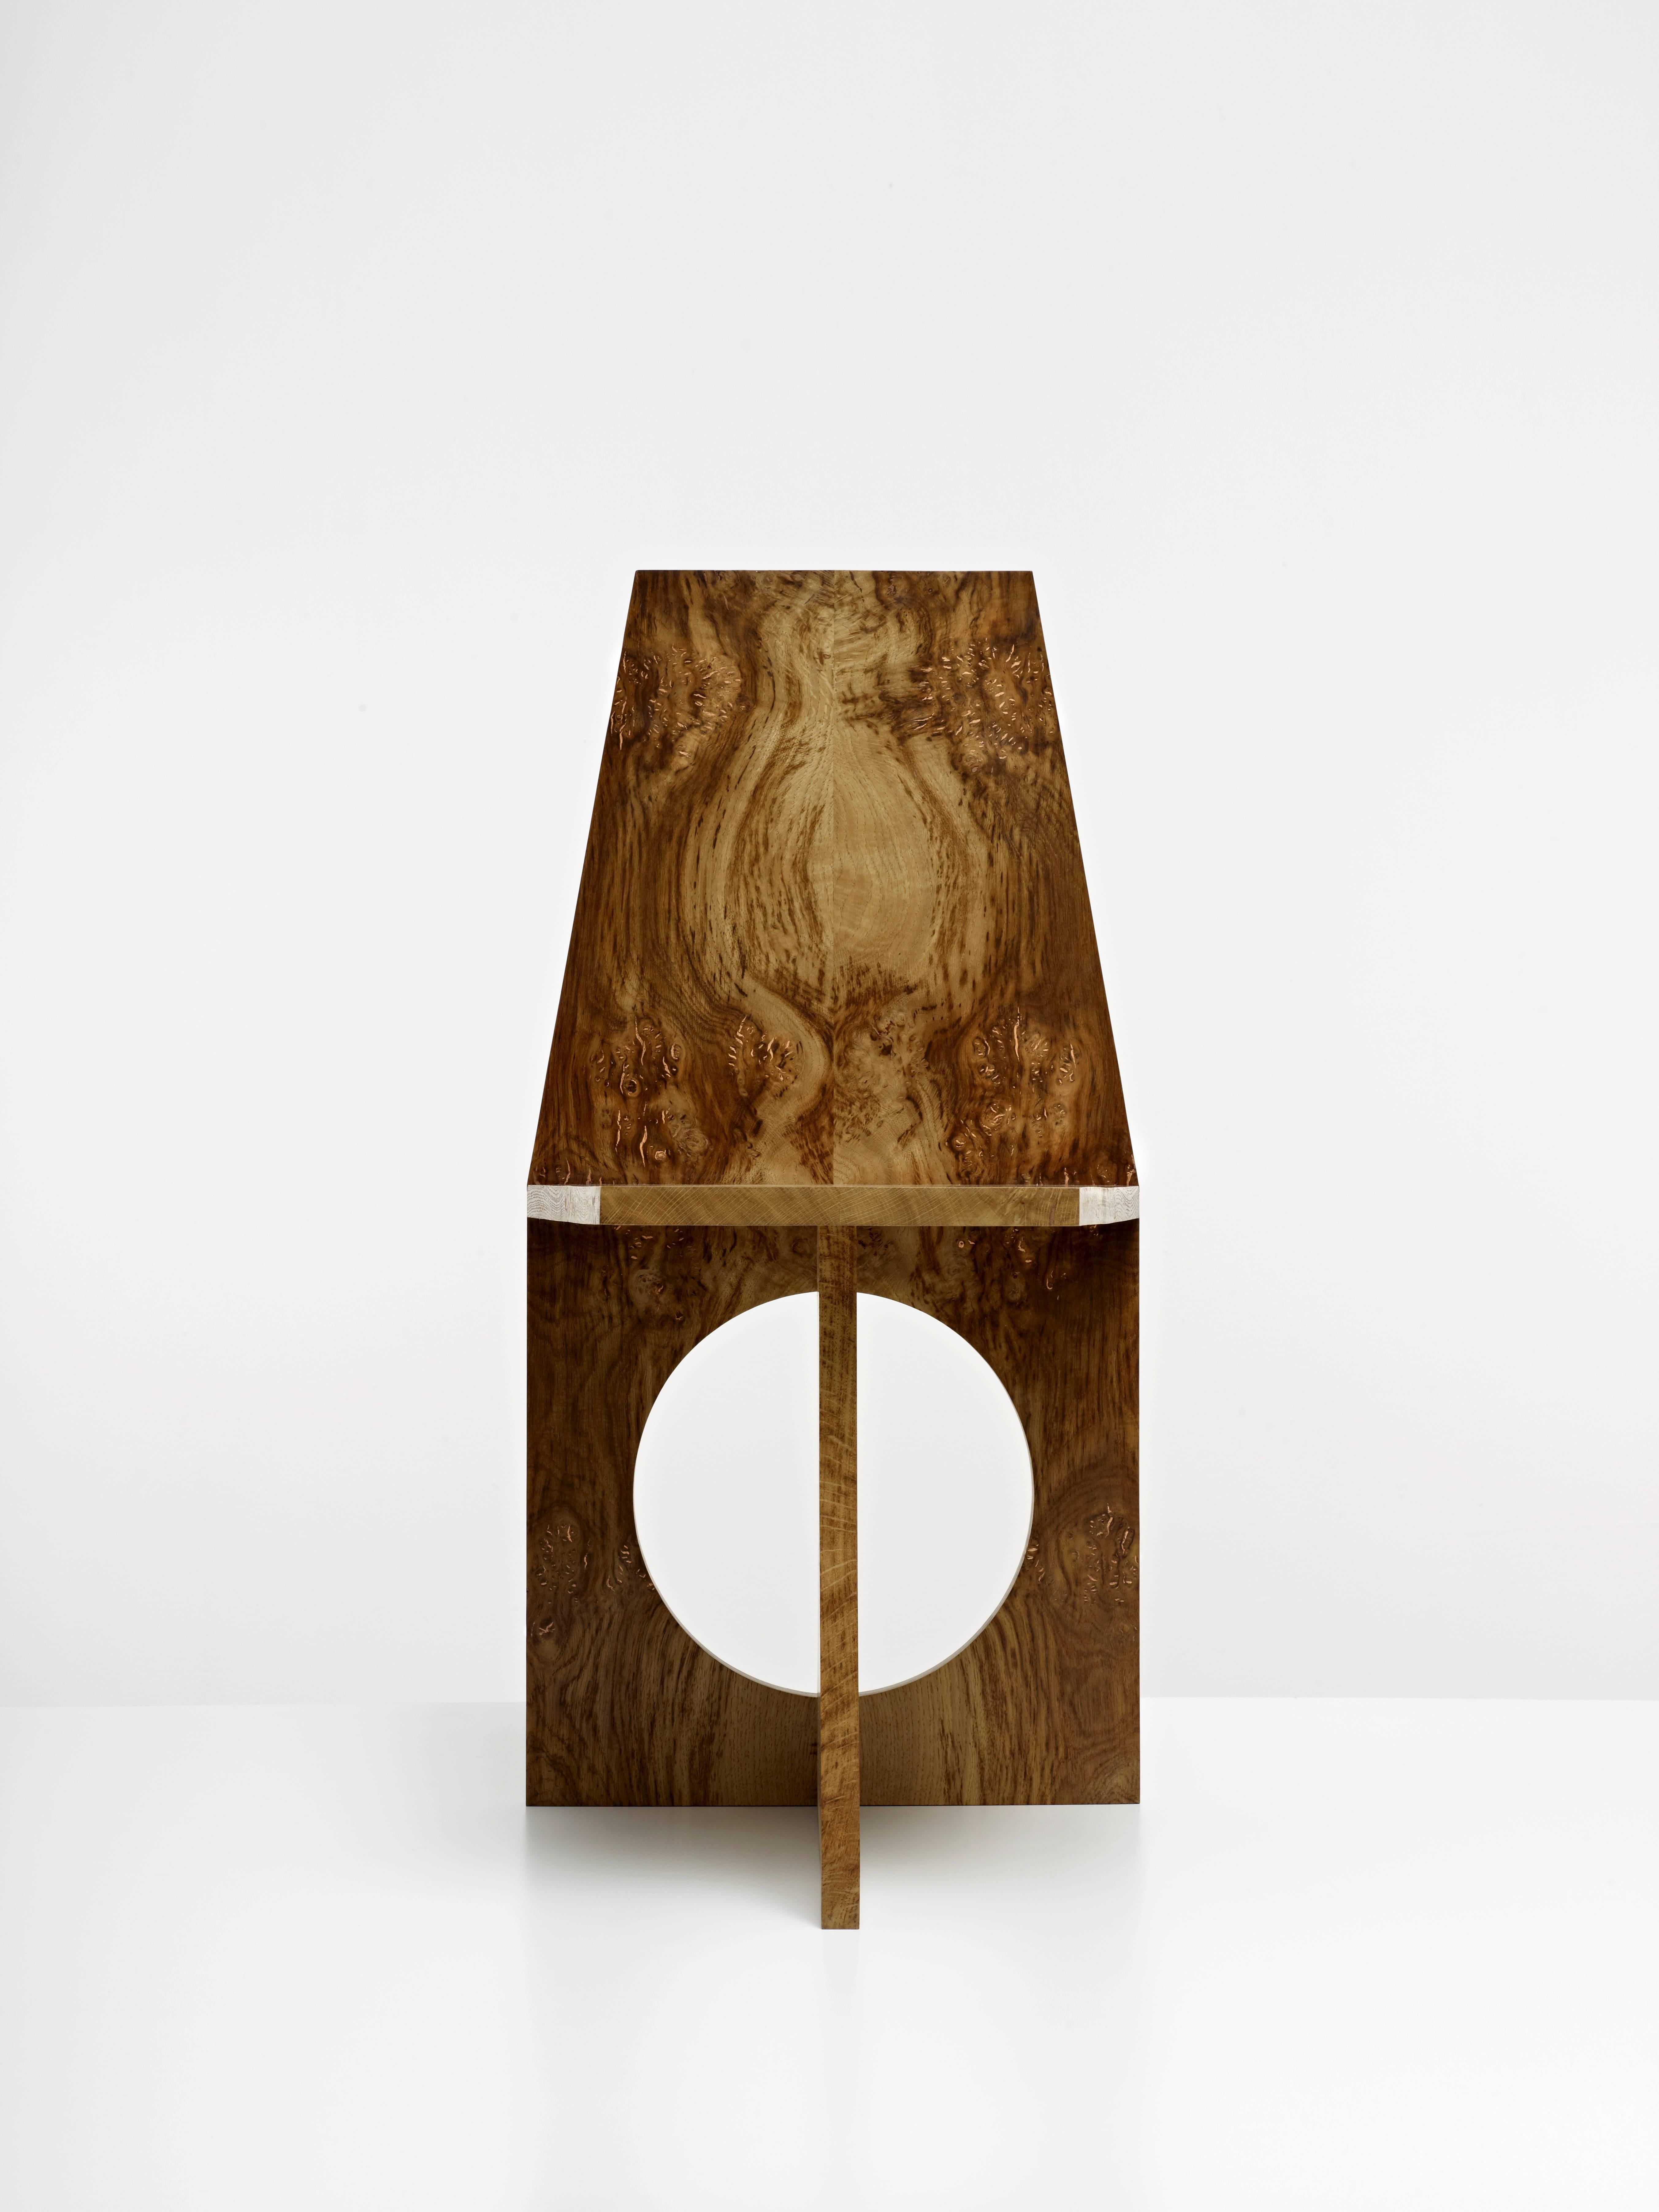 British Triton Chair, Brooksbank & Collins, 2015 For Sale